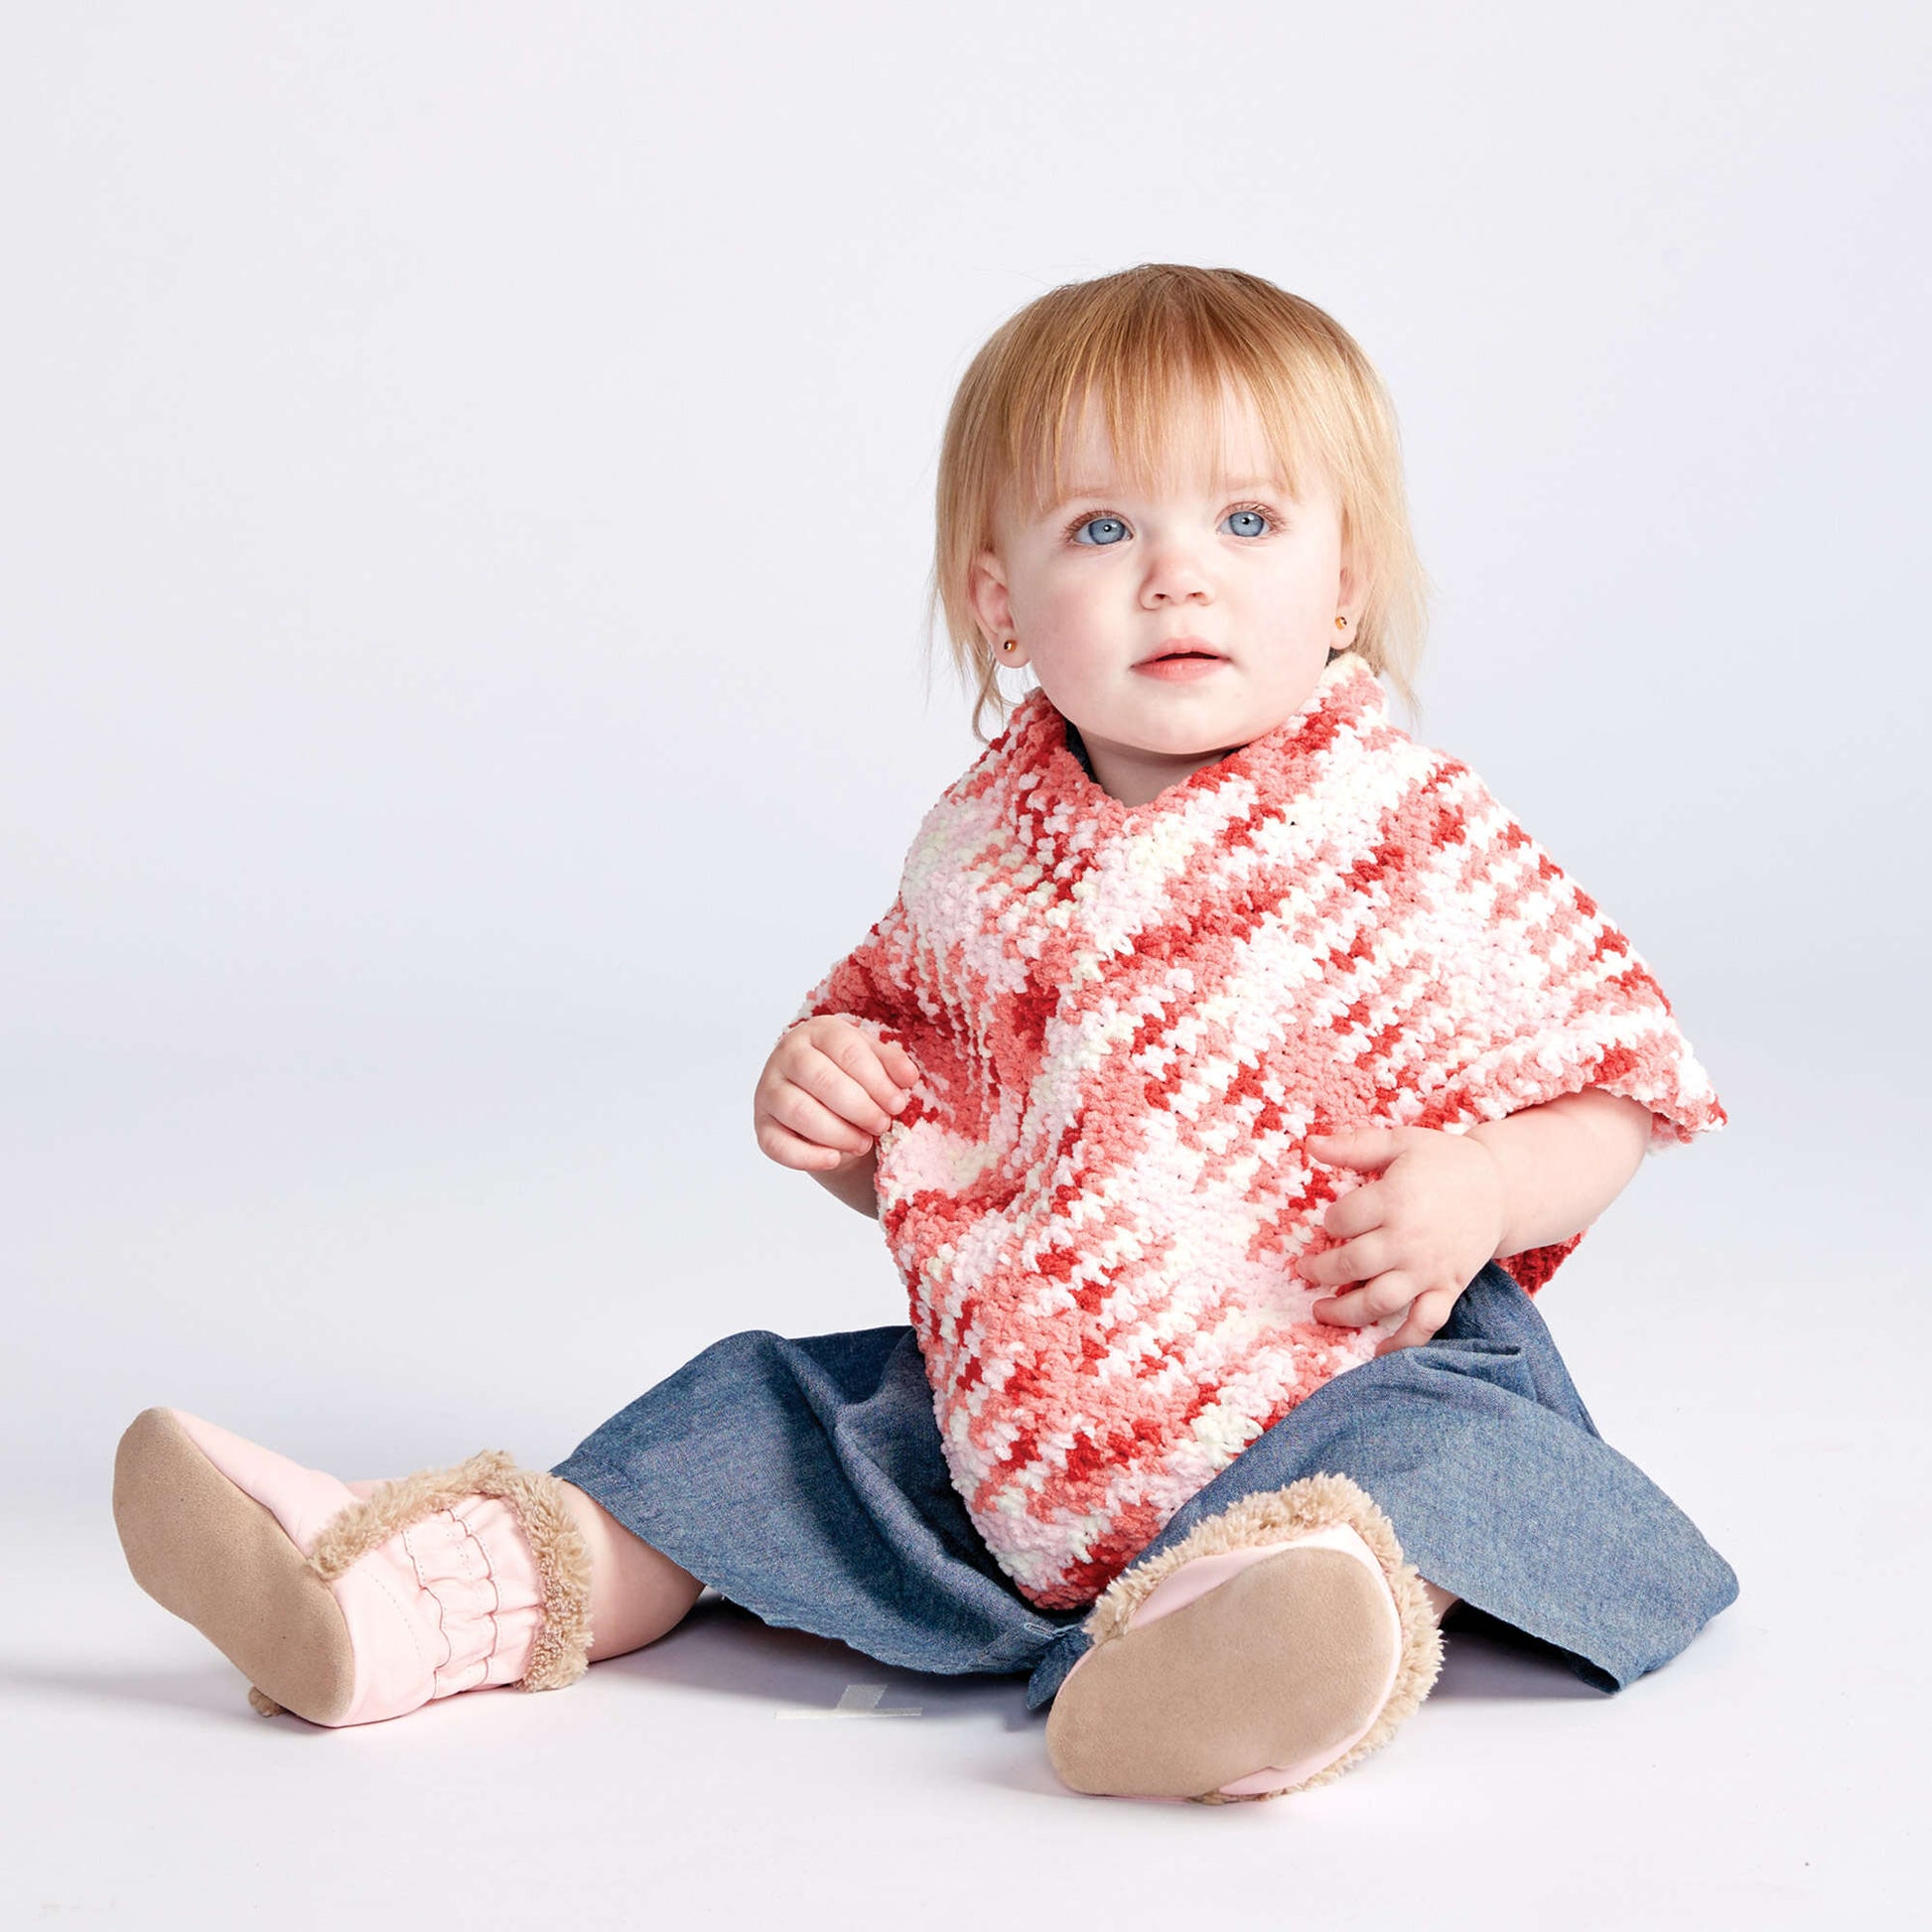 Free Bernat Simple Crochet Baby Poncho Pattern